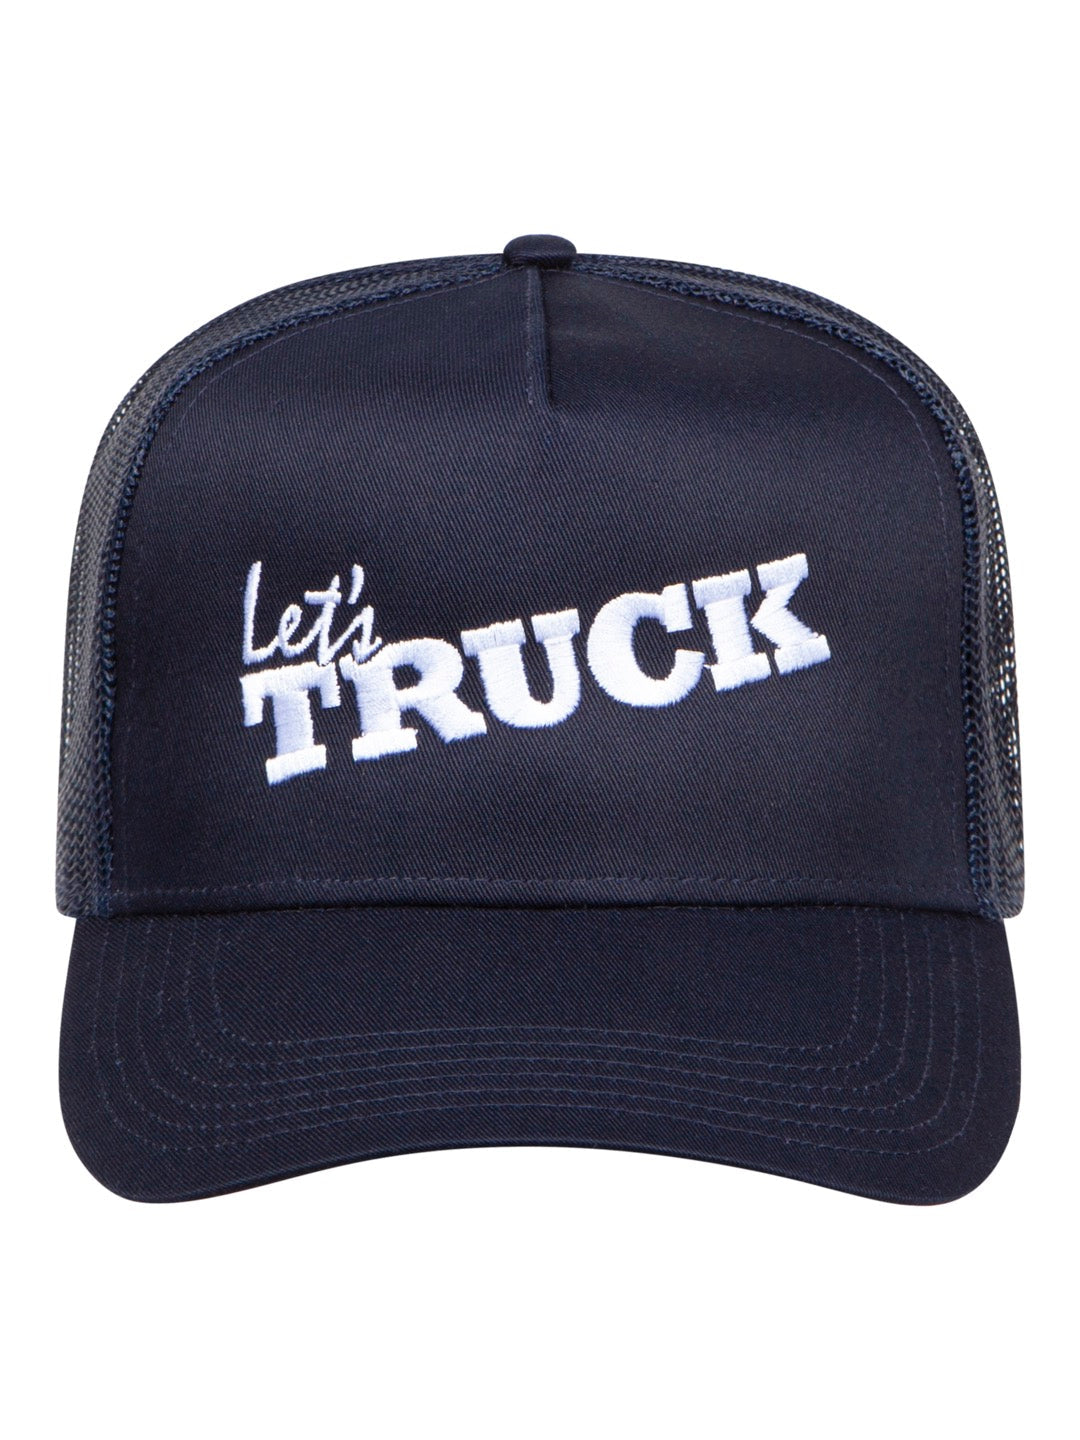 Let's Truck Trucker Hat Navy-Culk